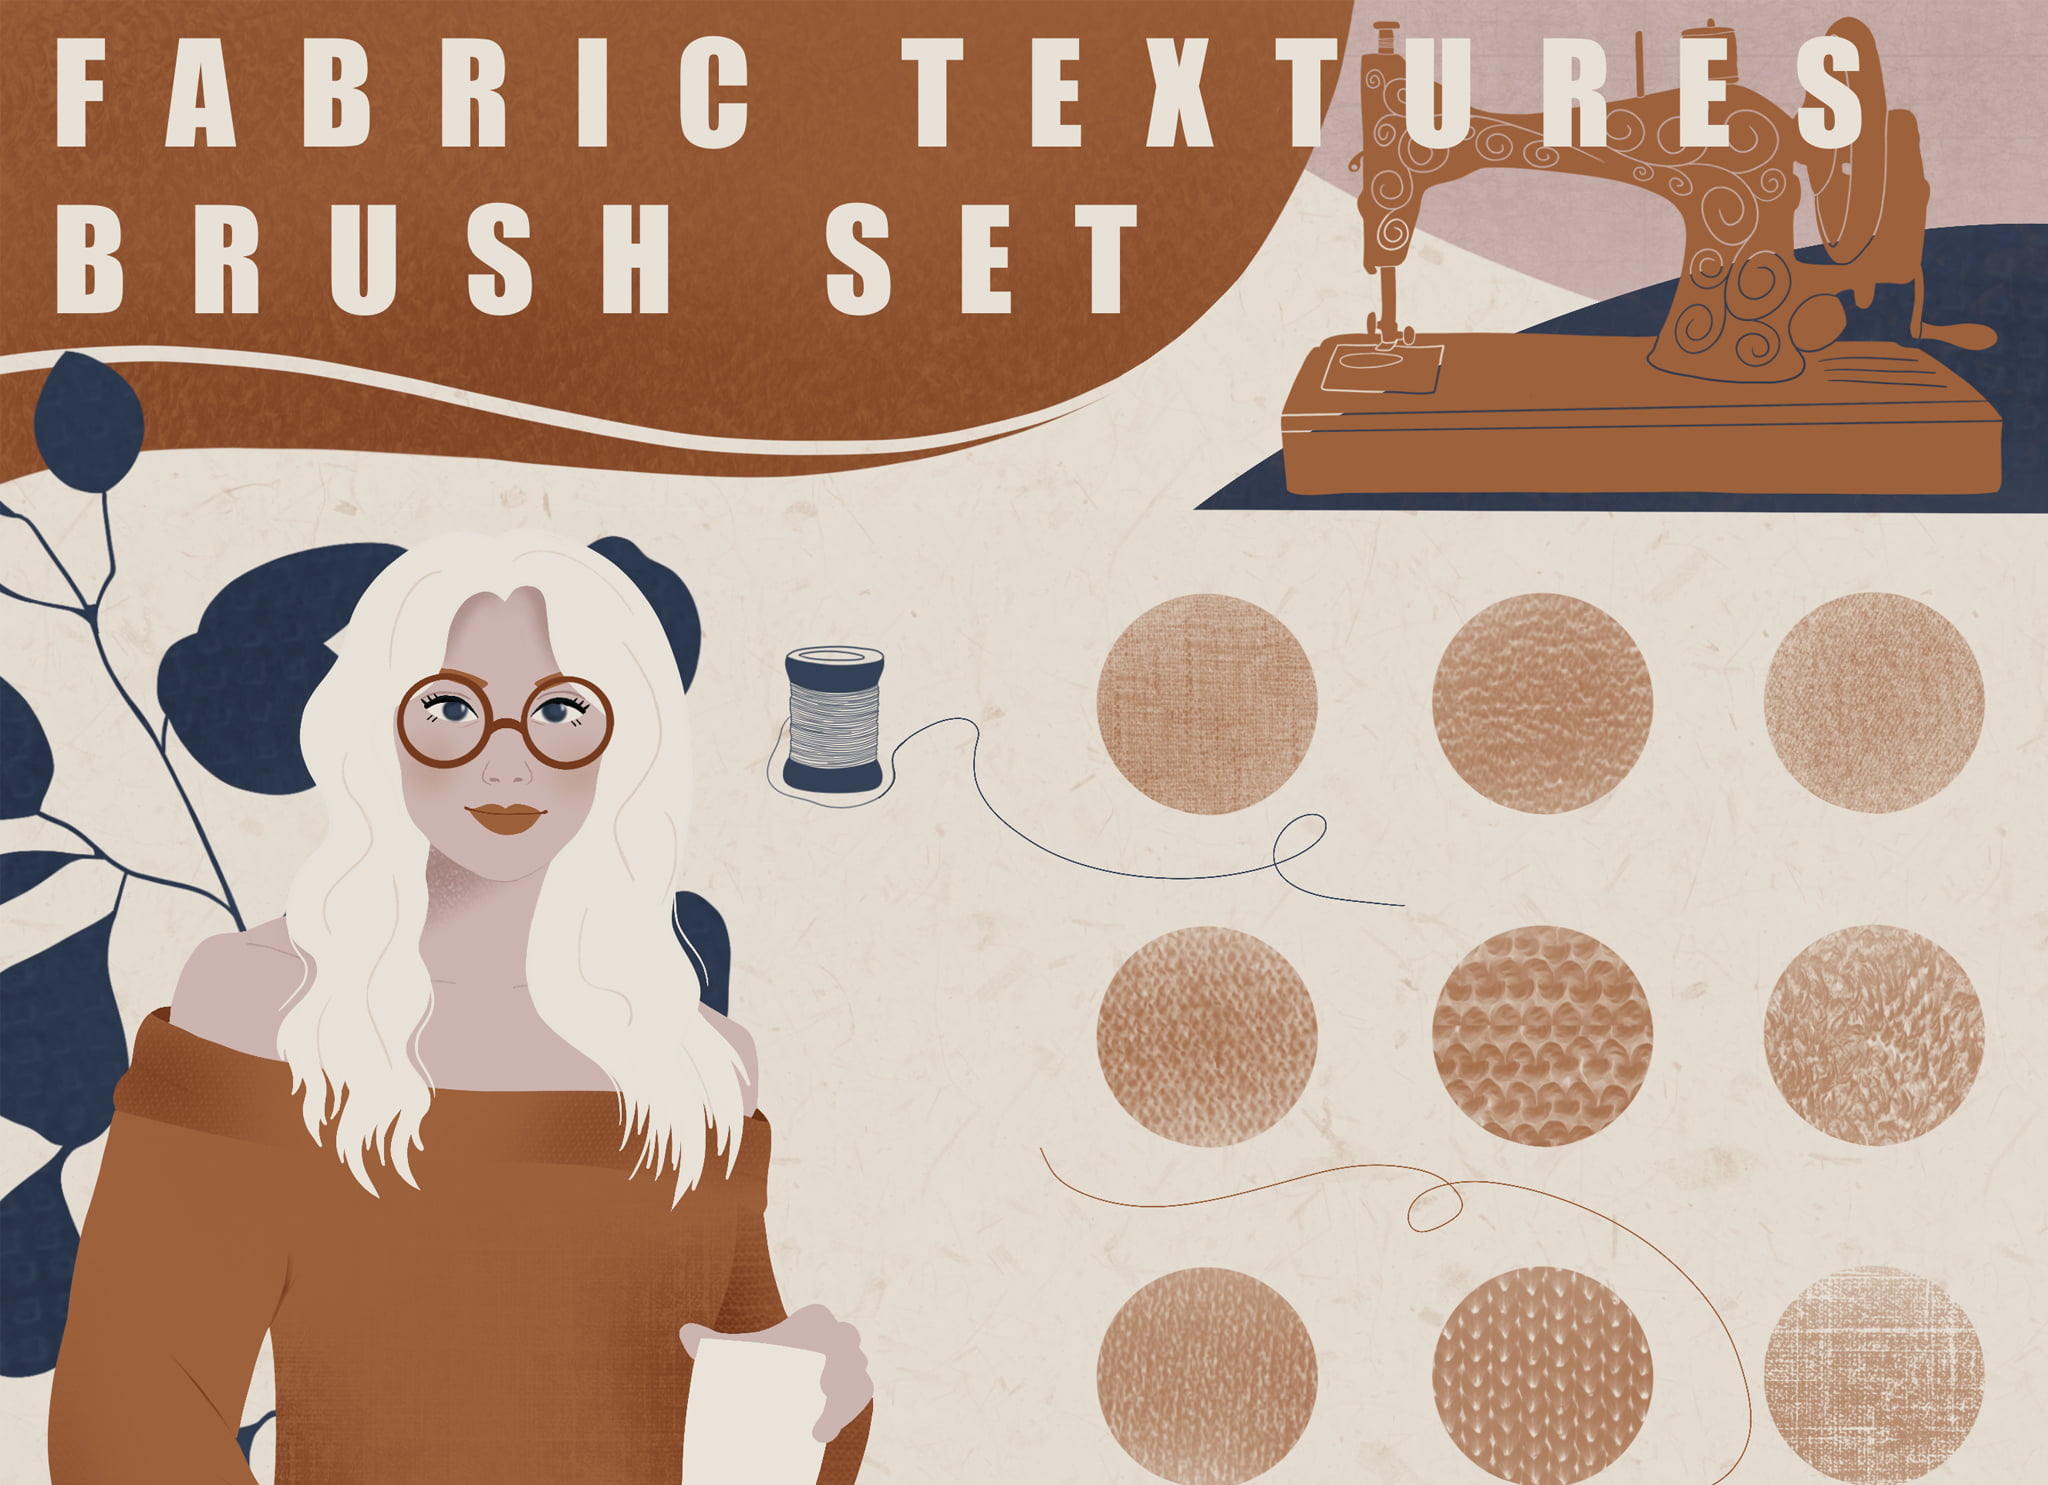 procreate fabric brush free